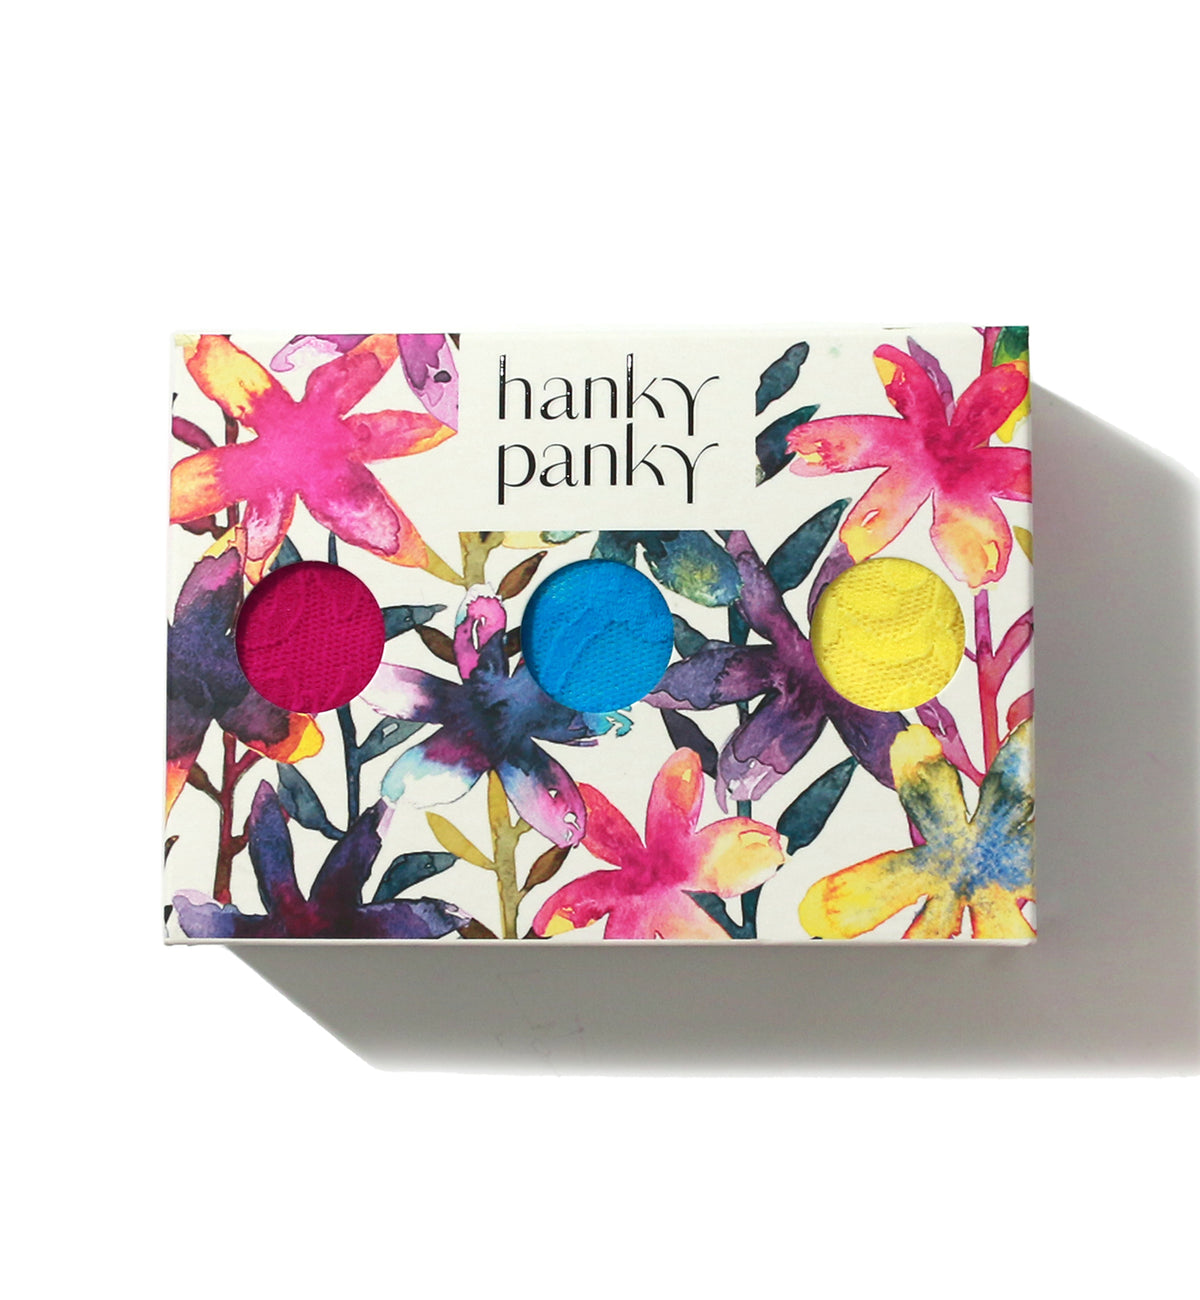 Hanky Panky 3-PACK Signature Lace Original Rise Thong (48113PK),Still Blooming - Venetian Pink/Fiji Blue/Citrus Punch,One Size